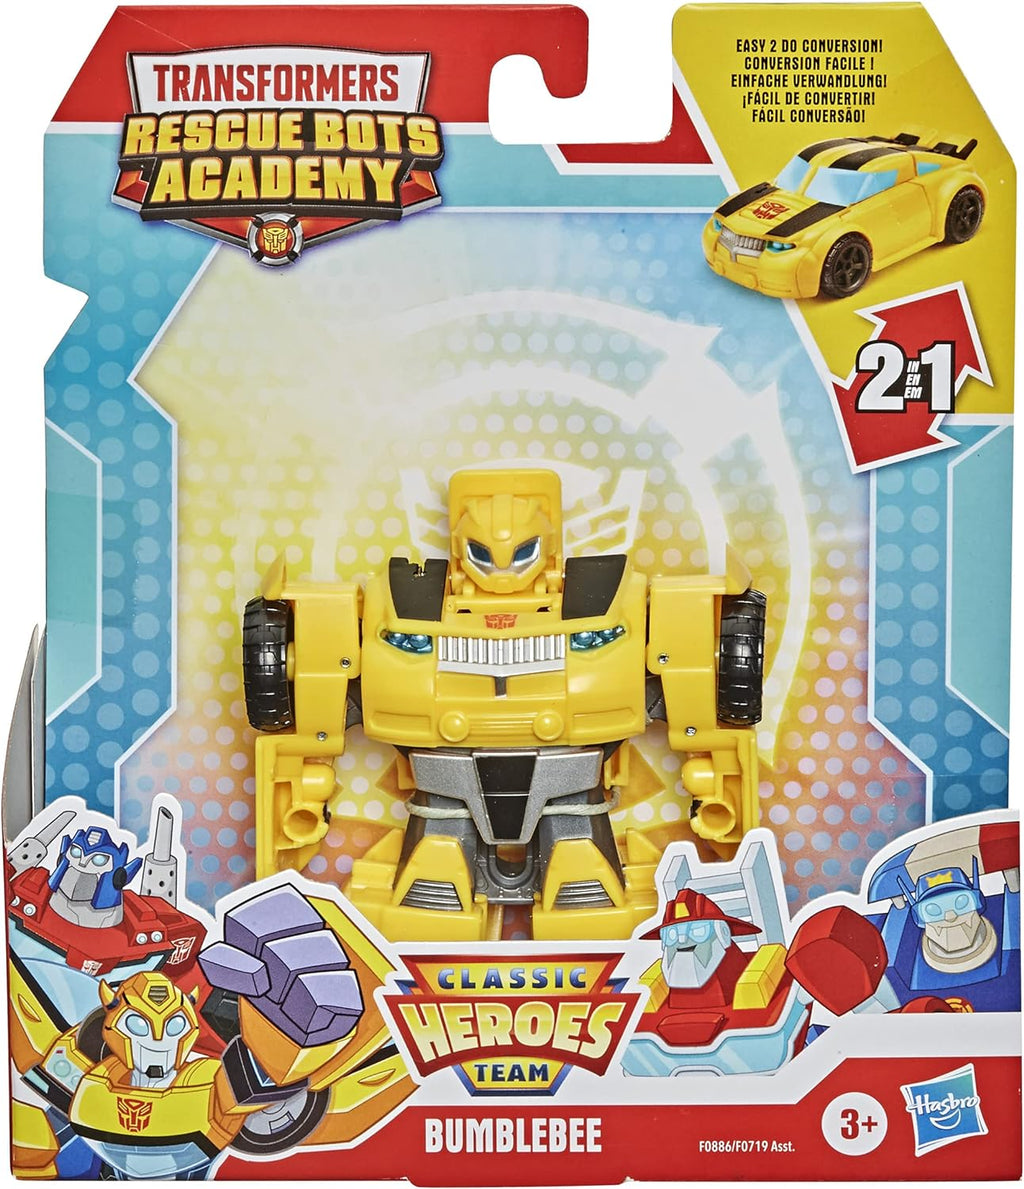 Transformers Studio Series Deluxe 01 Gamer Edition Bumblebee Converting  Action Figure (4.5”)